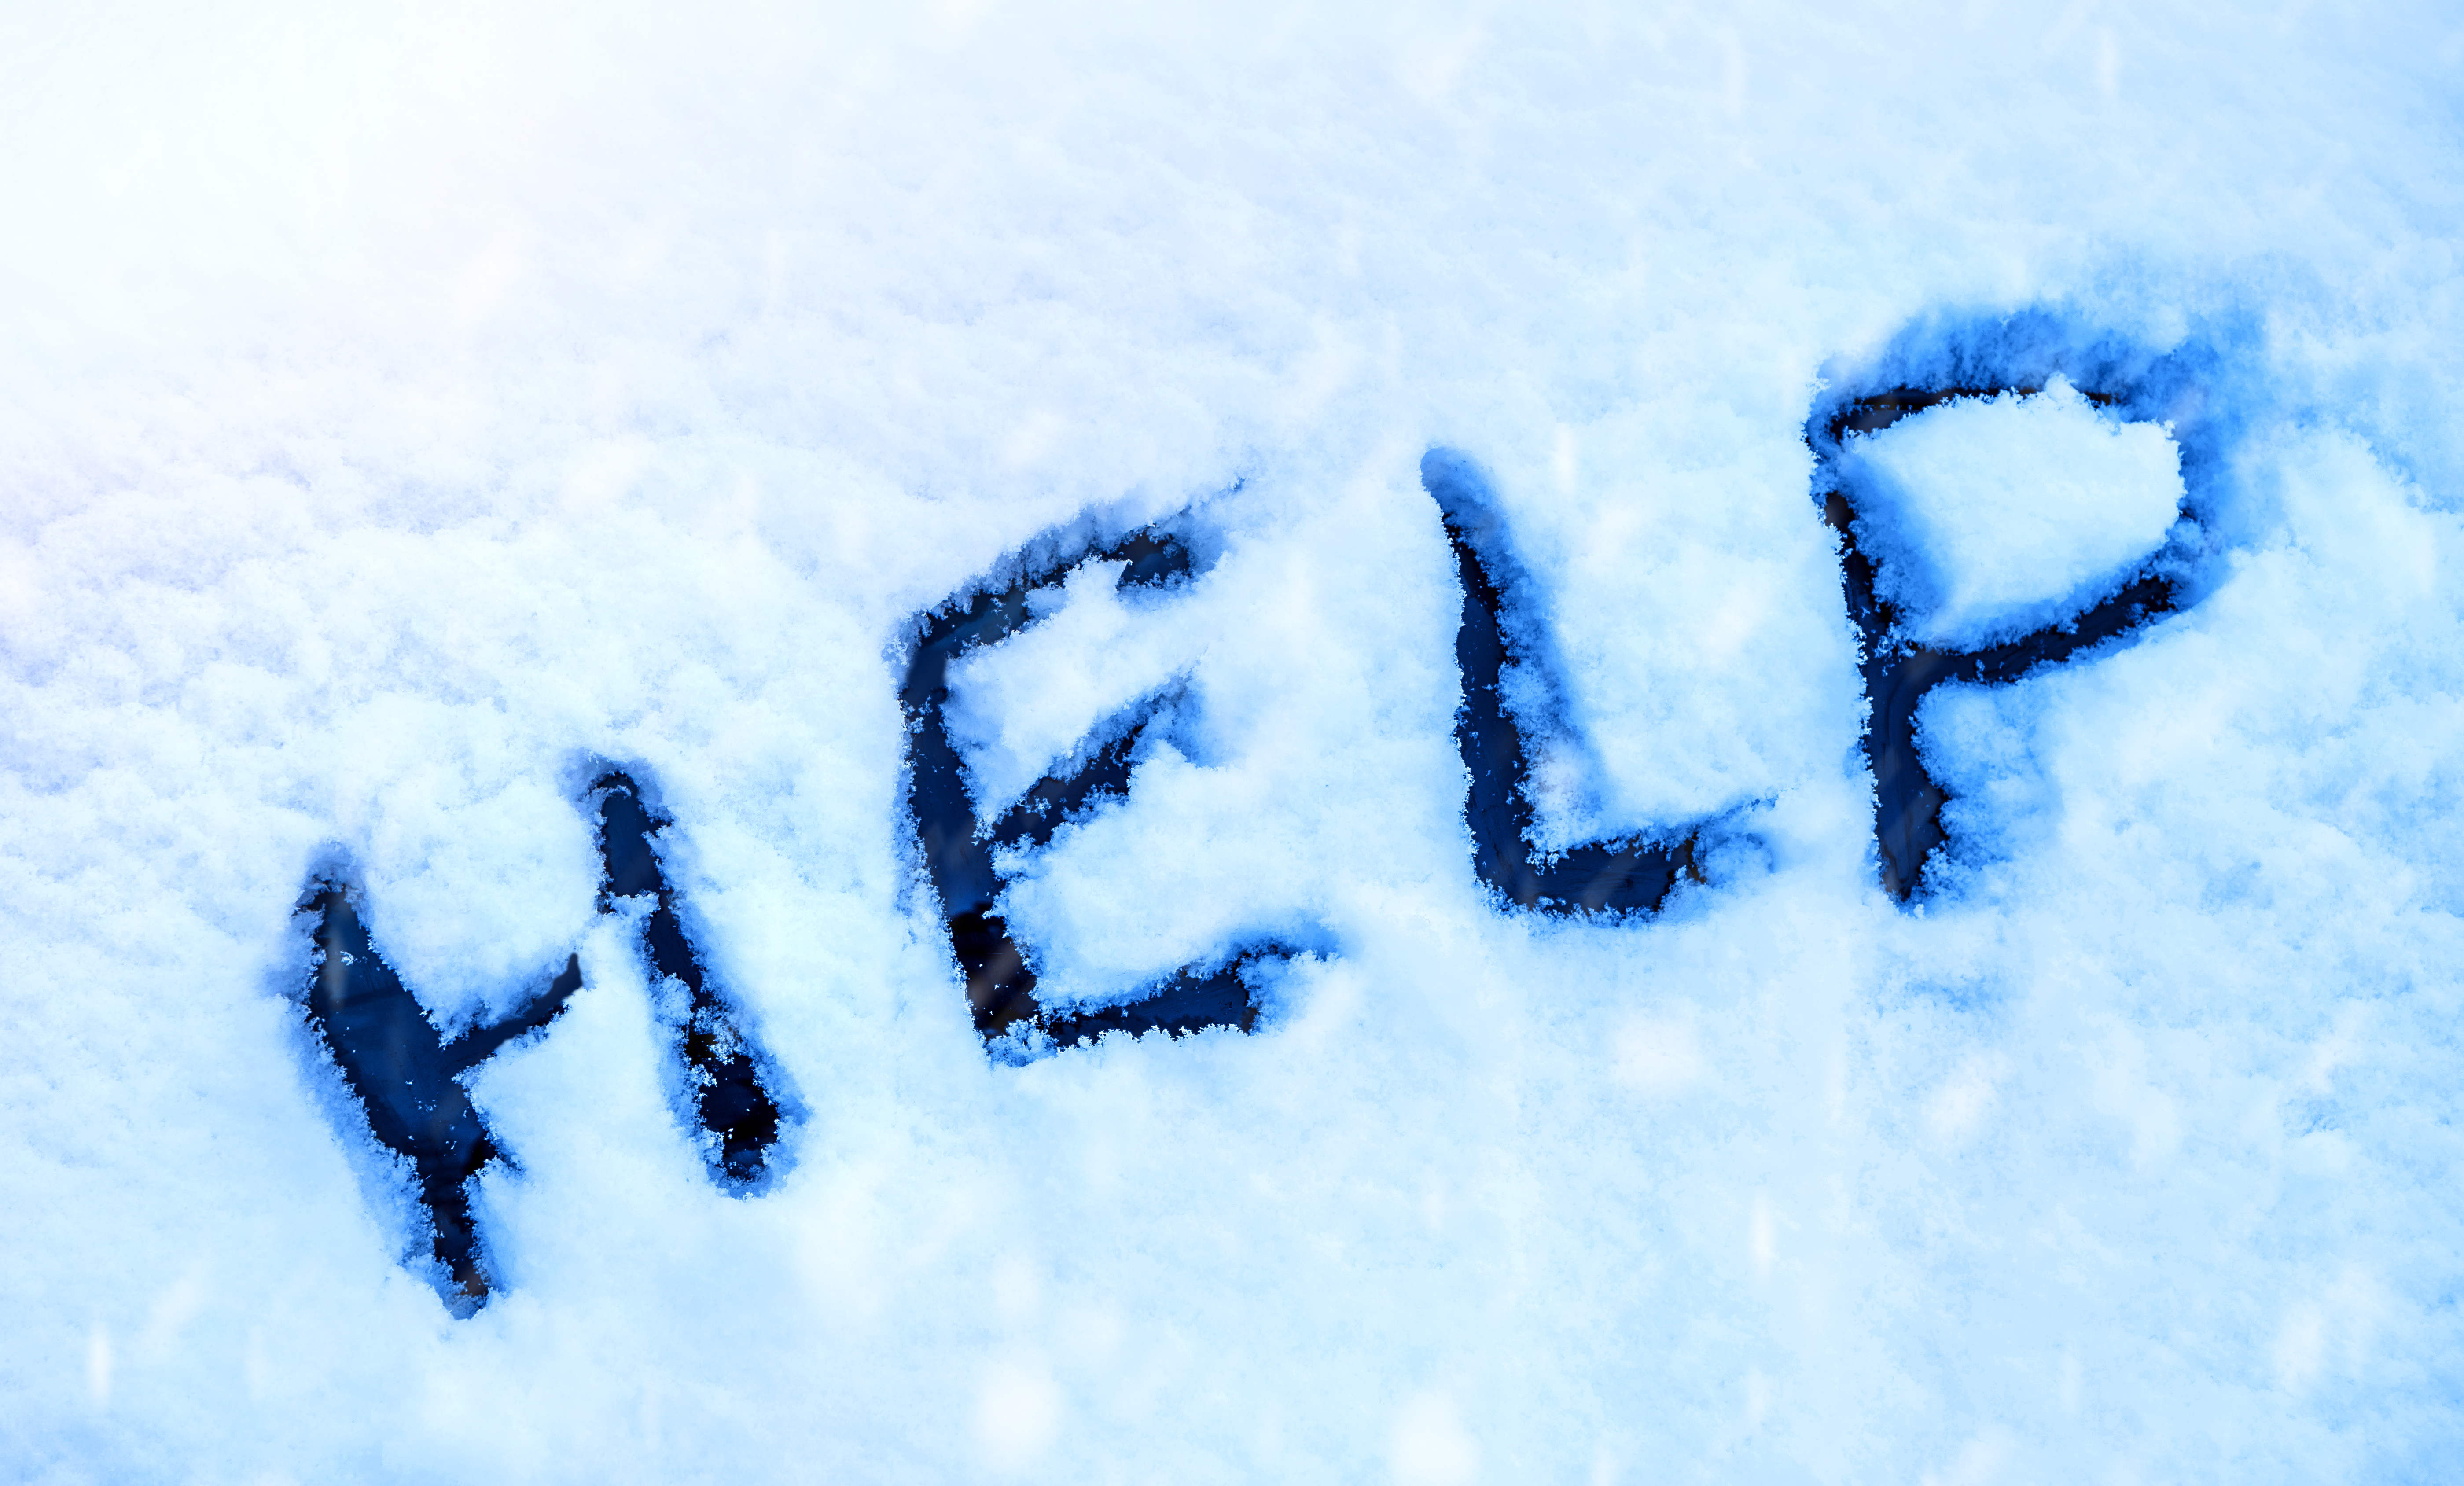 Word Help, written on a snow. | Source: Shutterstock